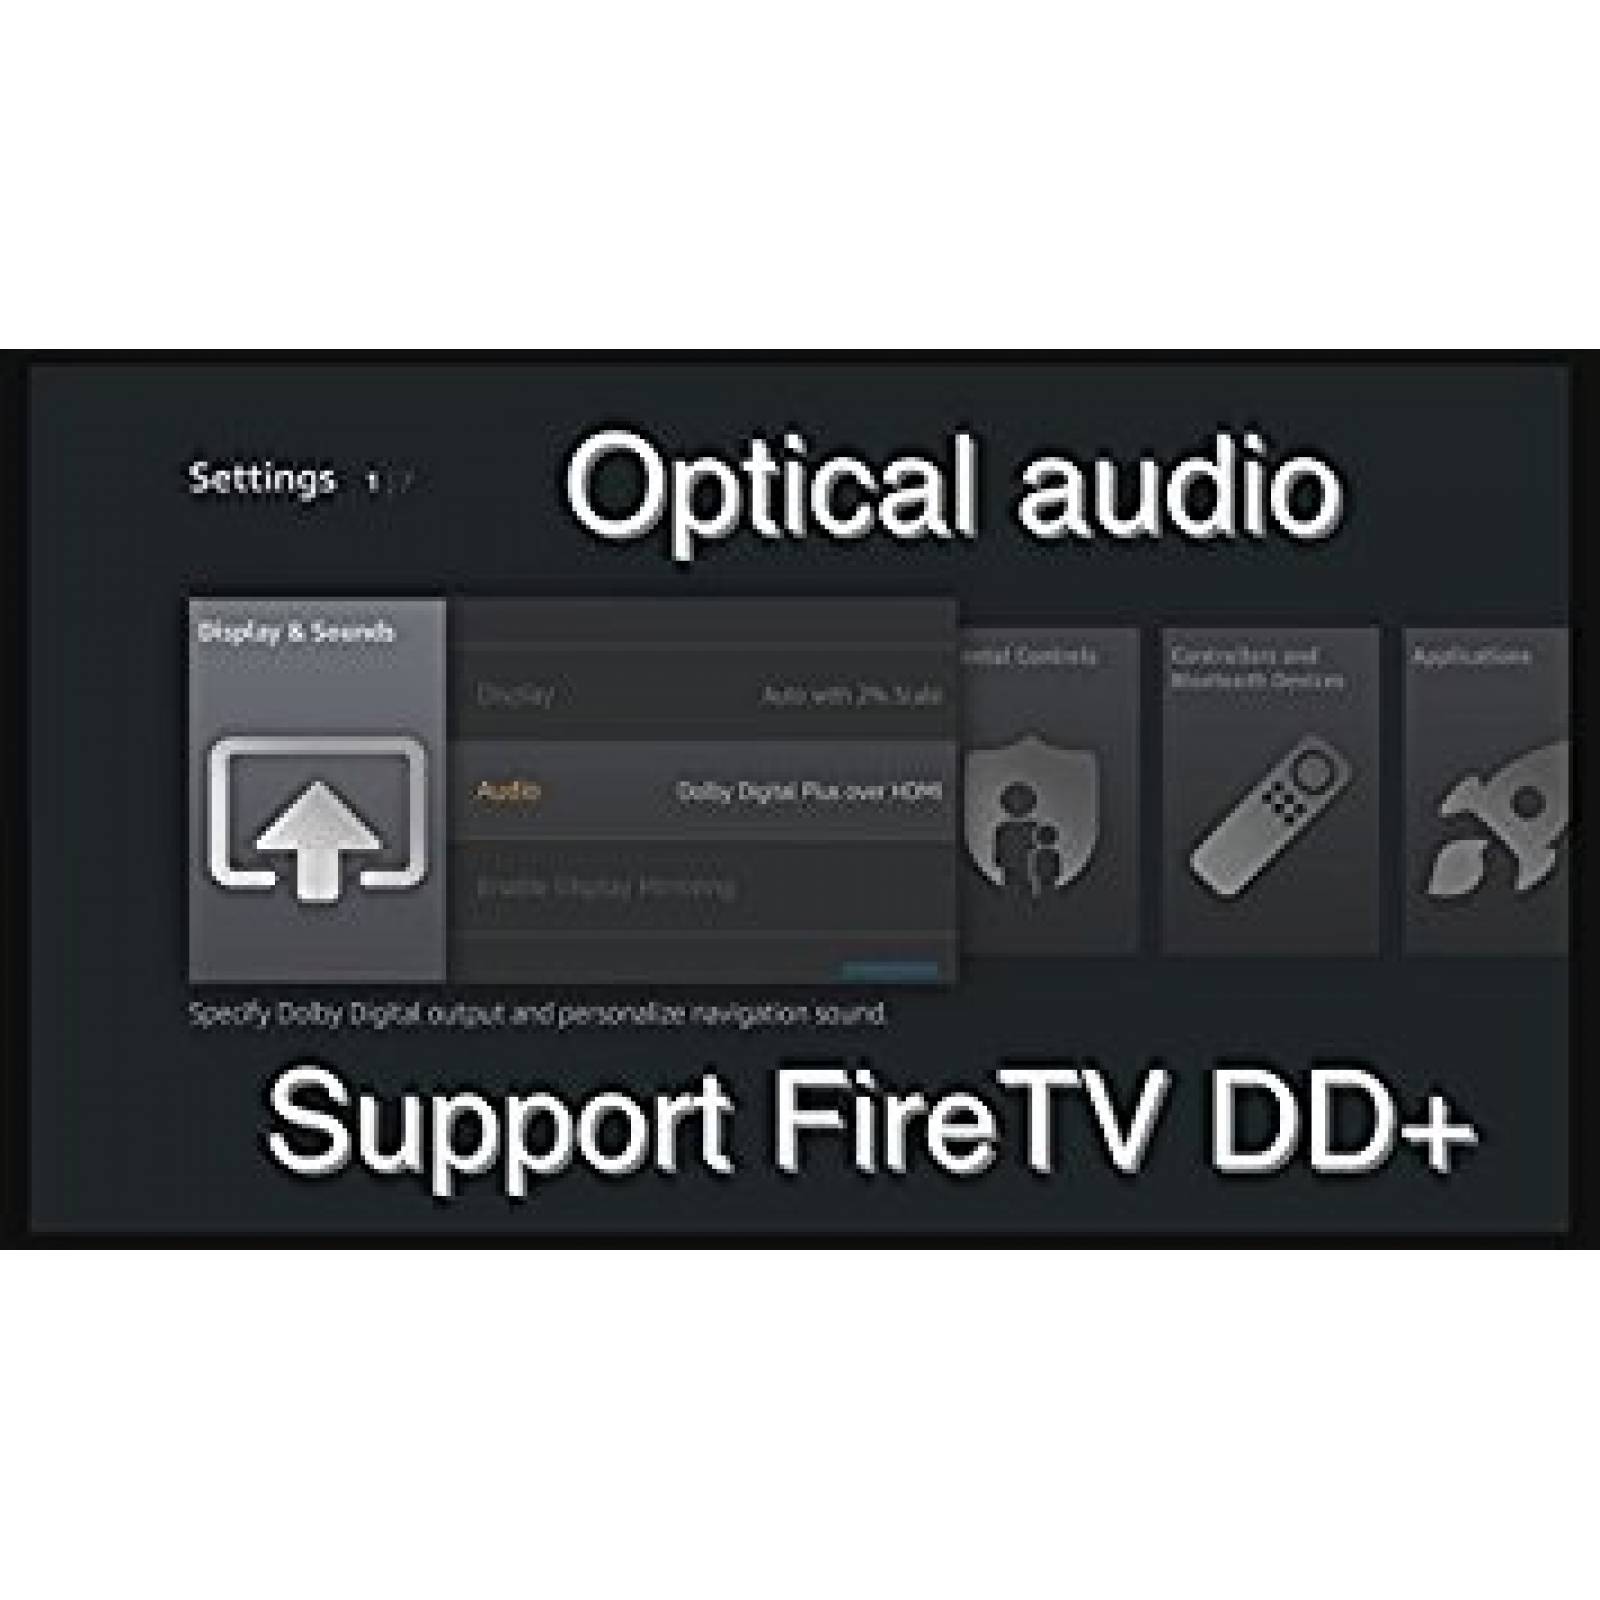 ViewHD HDMI Audio Extractor apoyo Ultra HD 4K arco MHL TOSLI